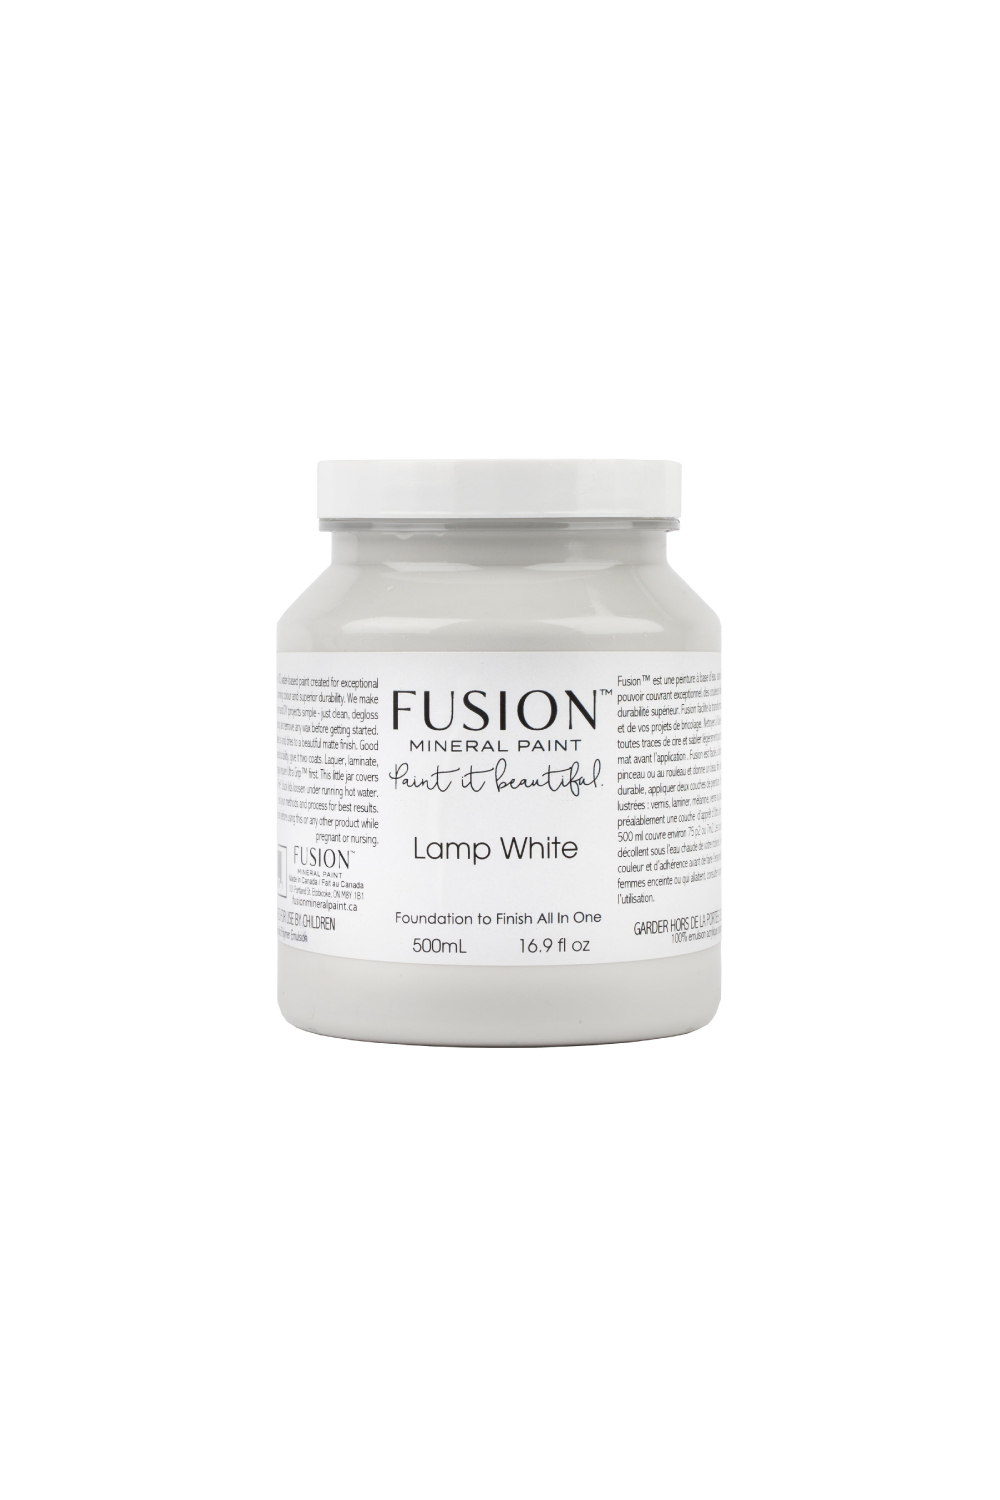 Fusion Mineral Paint vernice ecologica color bianco grigio